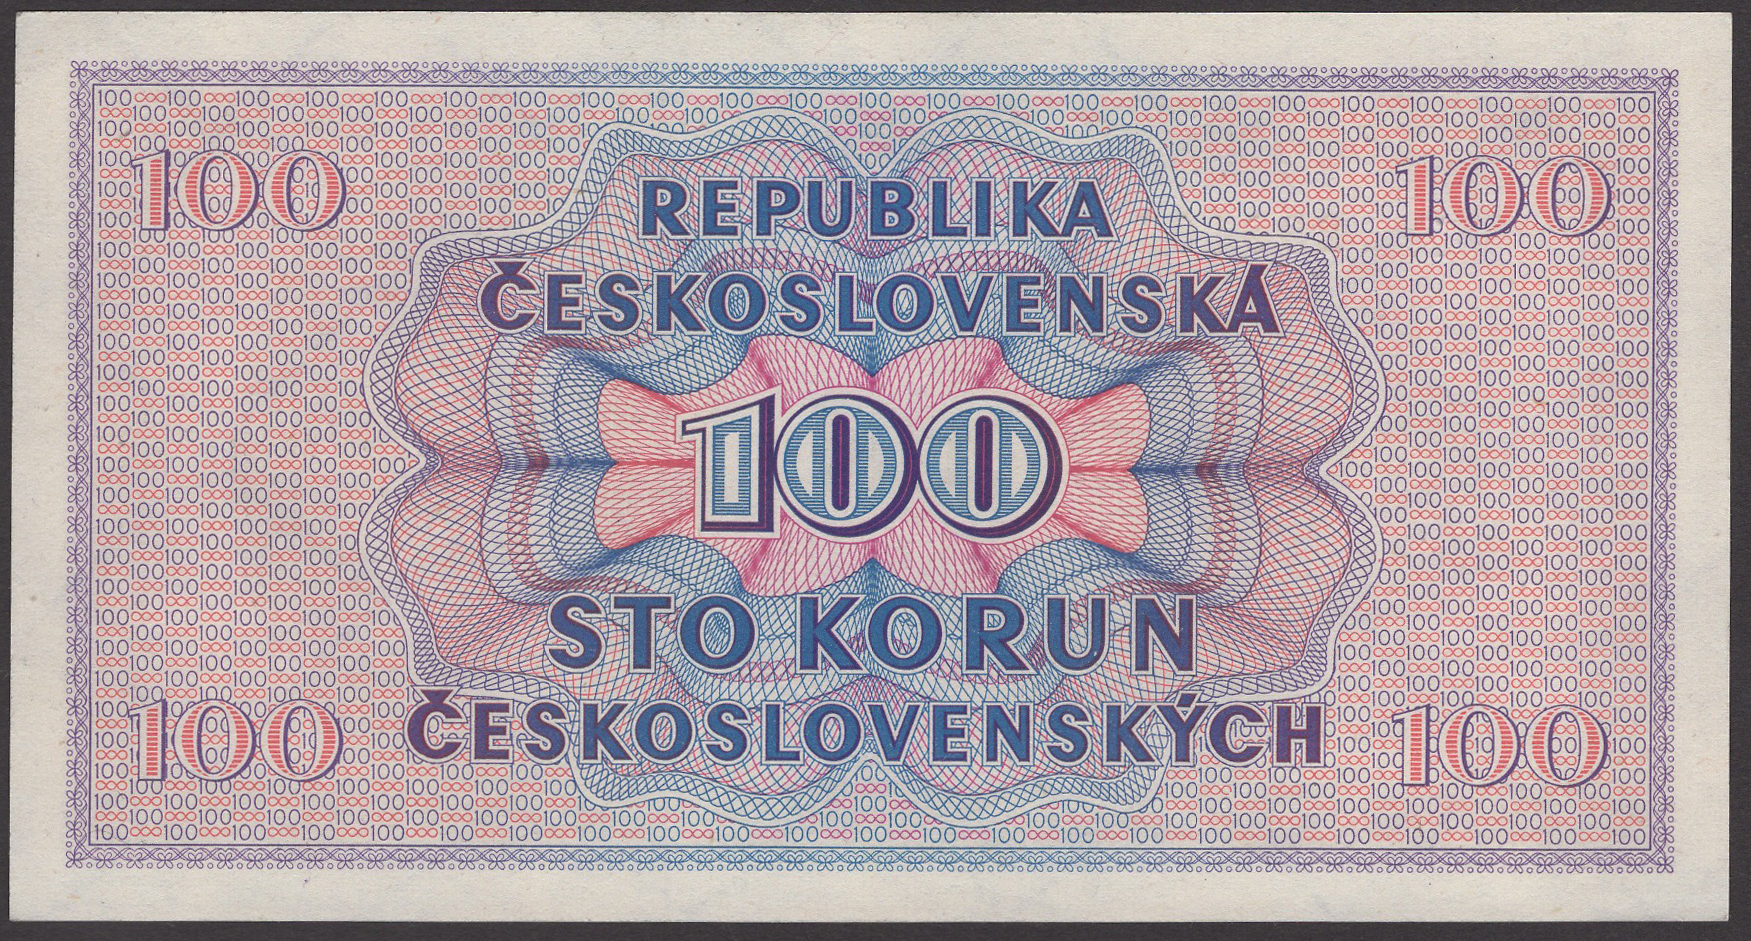 Republika Ceskoslovenska, 50 Korun (2), 1948, serial numbers A48 080411-12, also 100 Korun... - Image 4 of 4